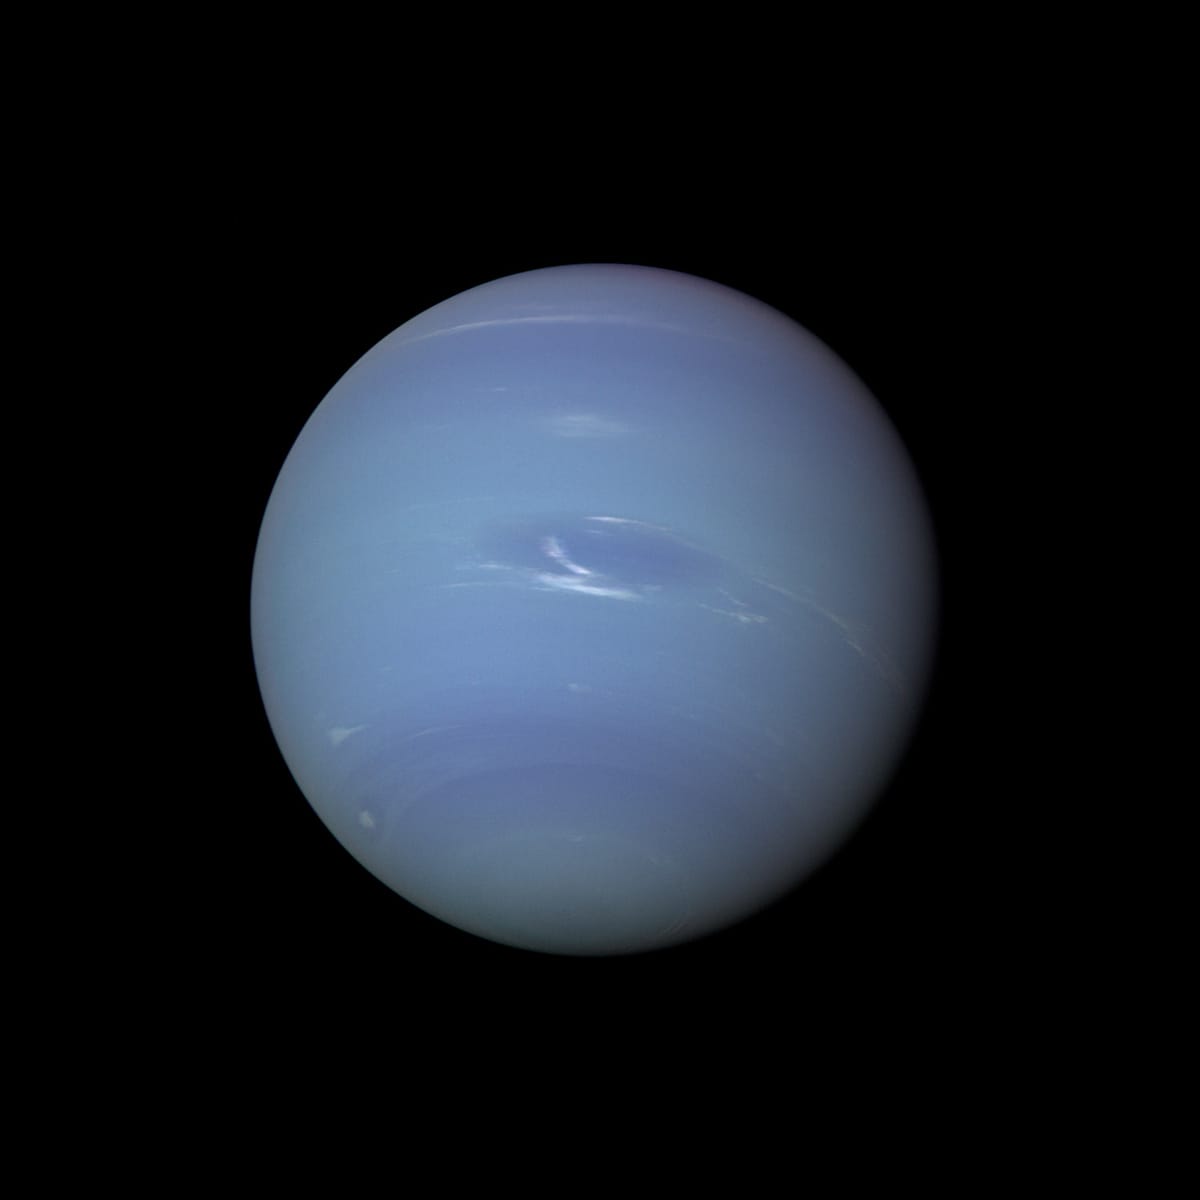 Some Neptune tidbits